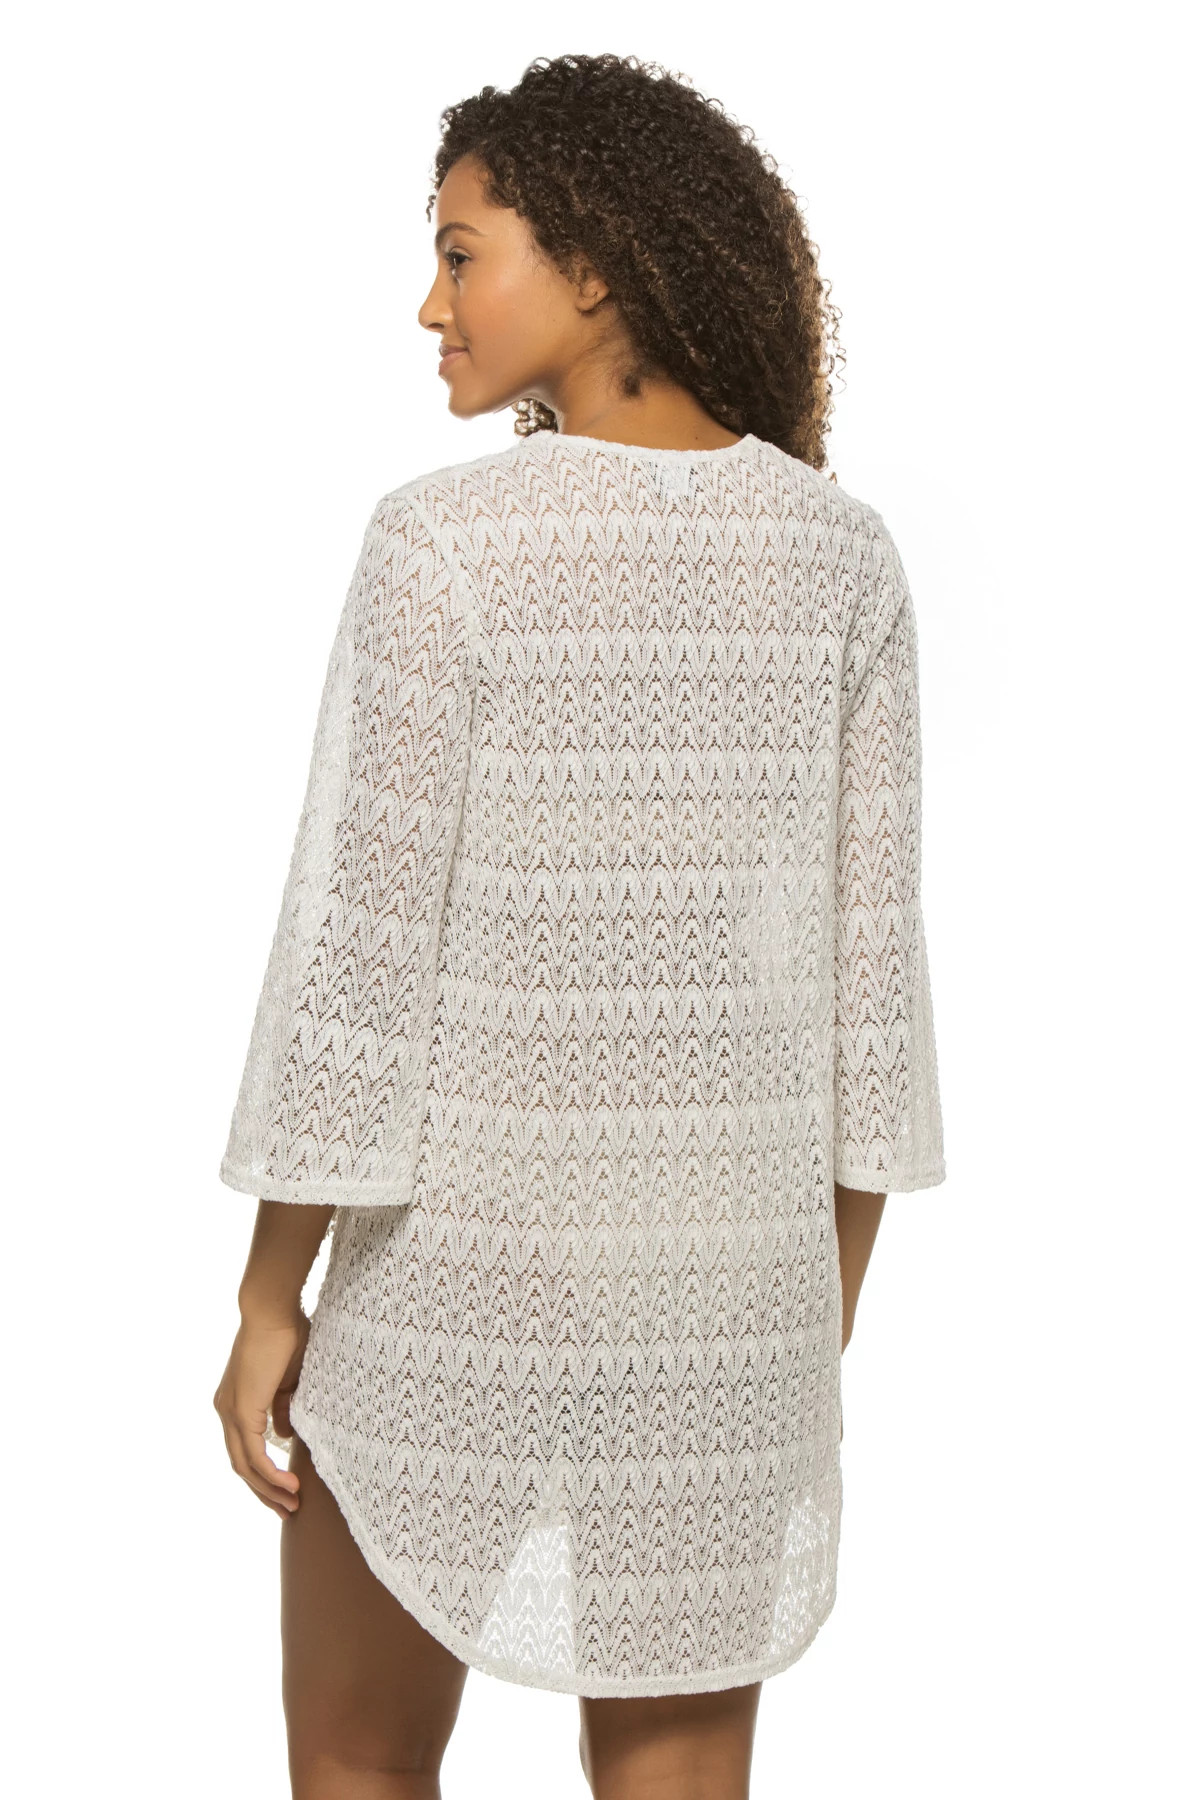 WHITE Crochet Tunic Dress image number 2